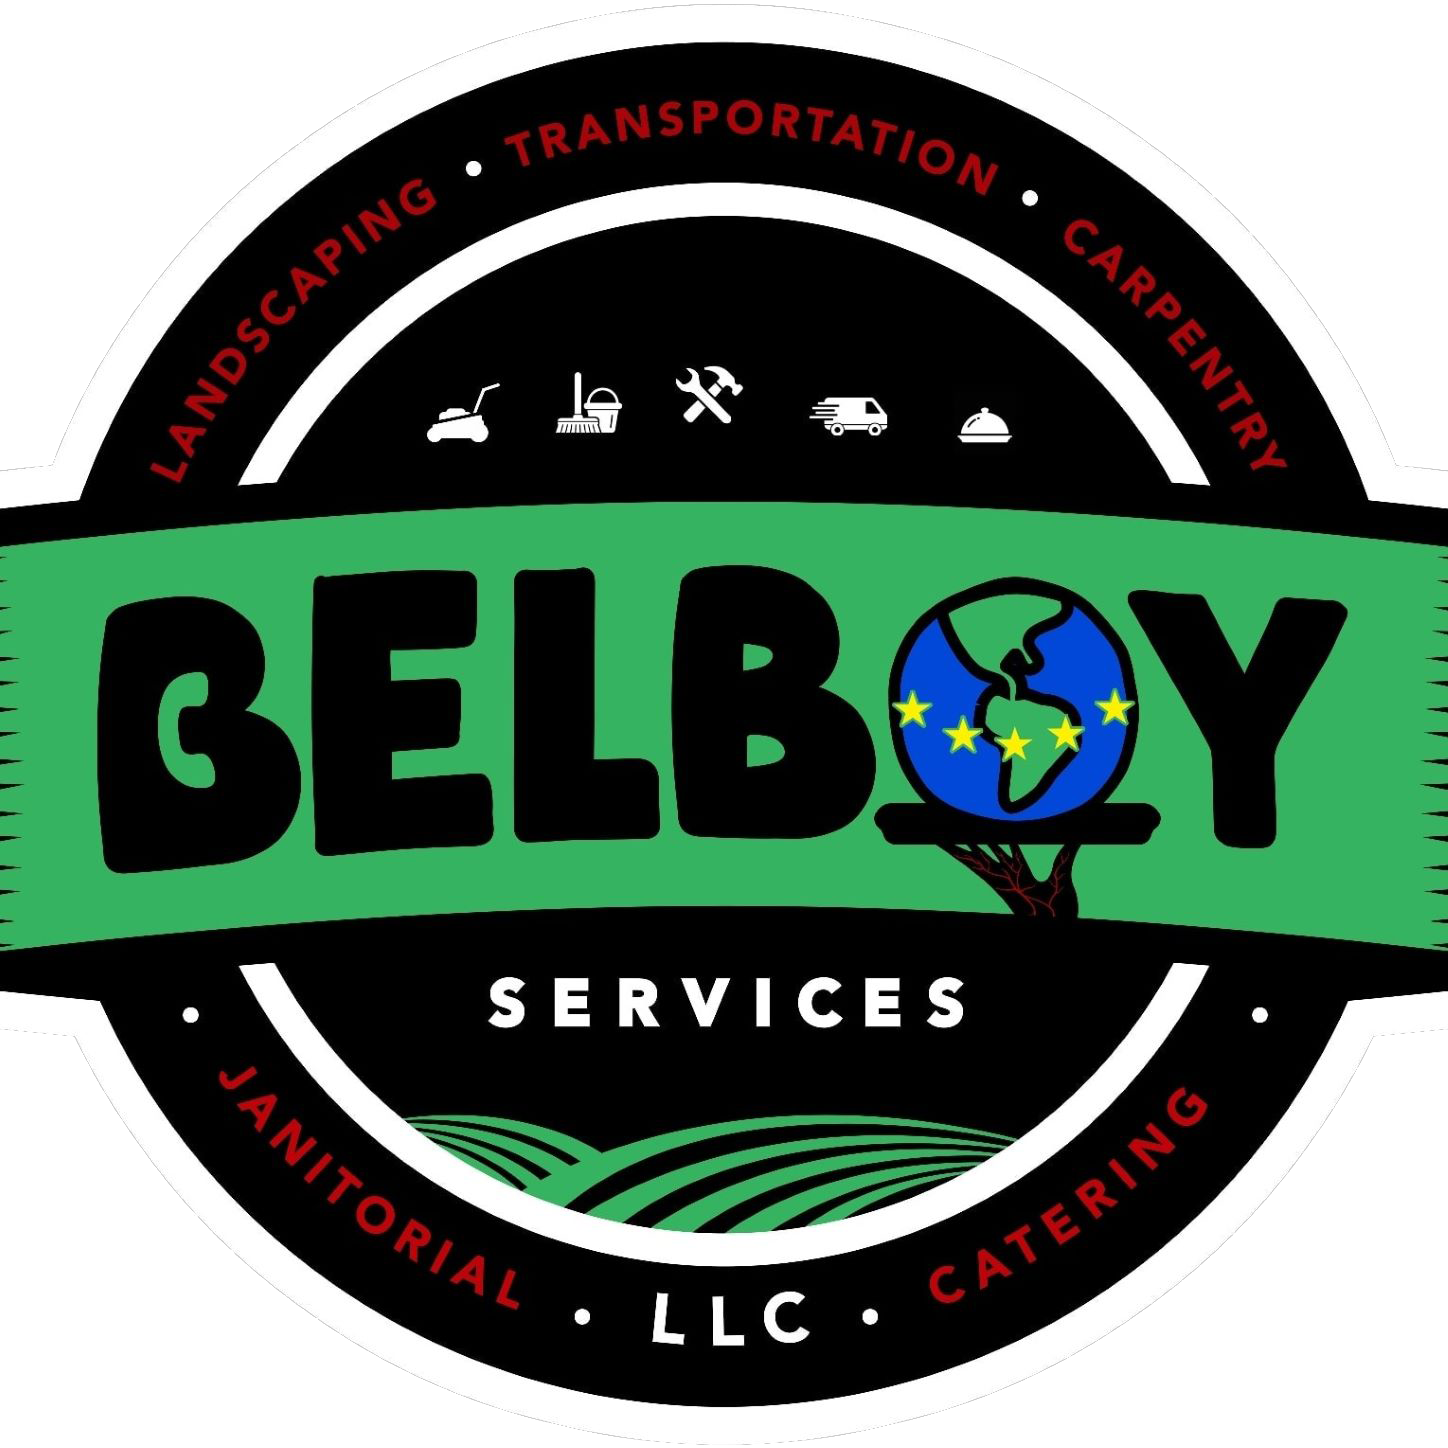 Belboy Services